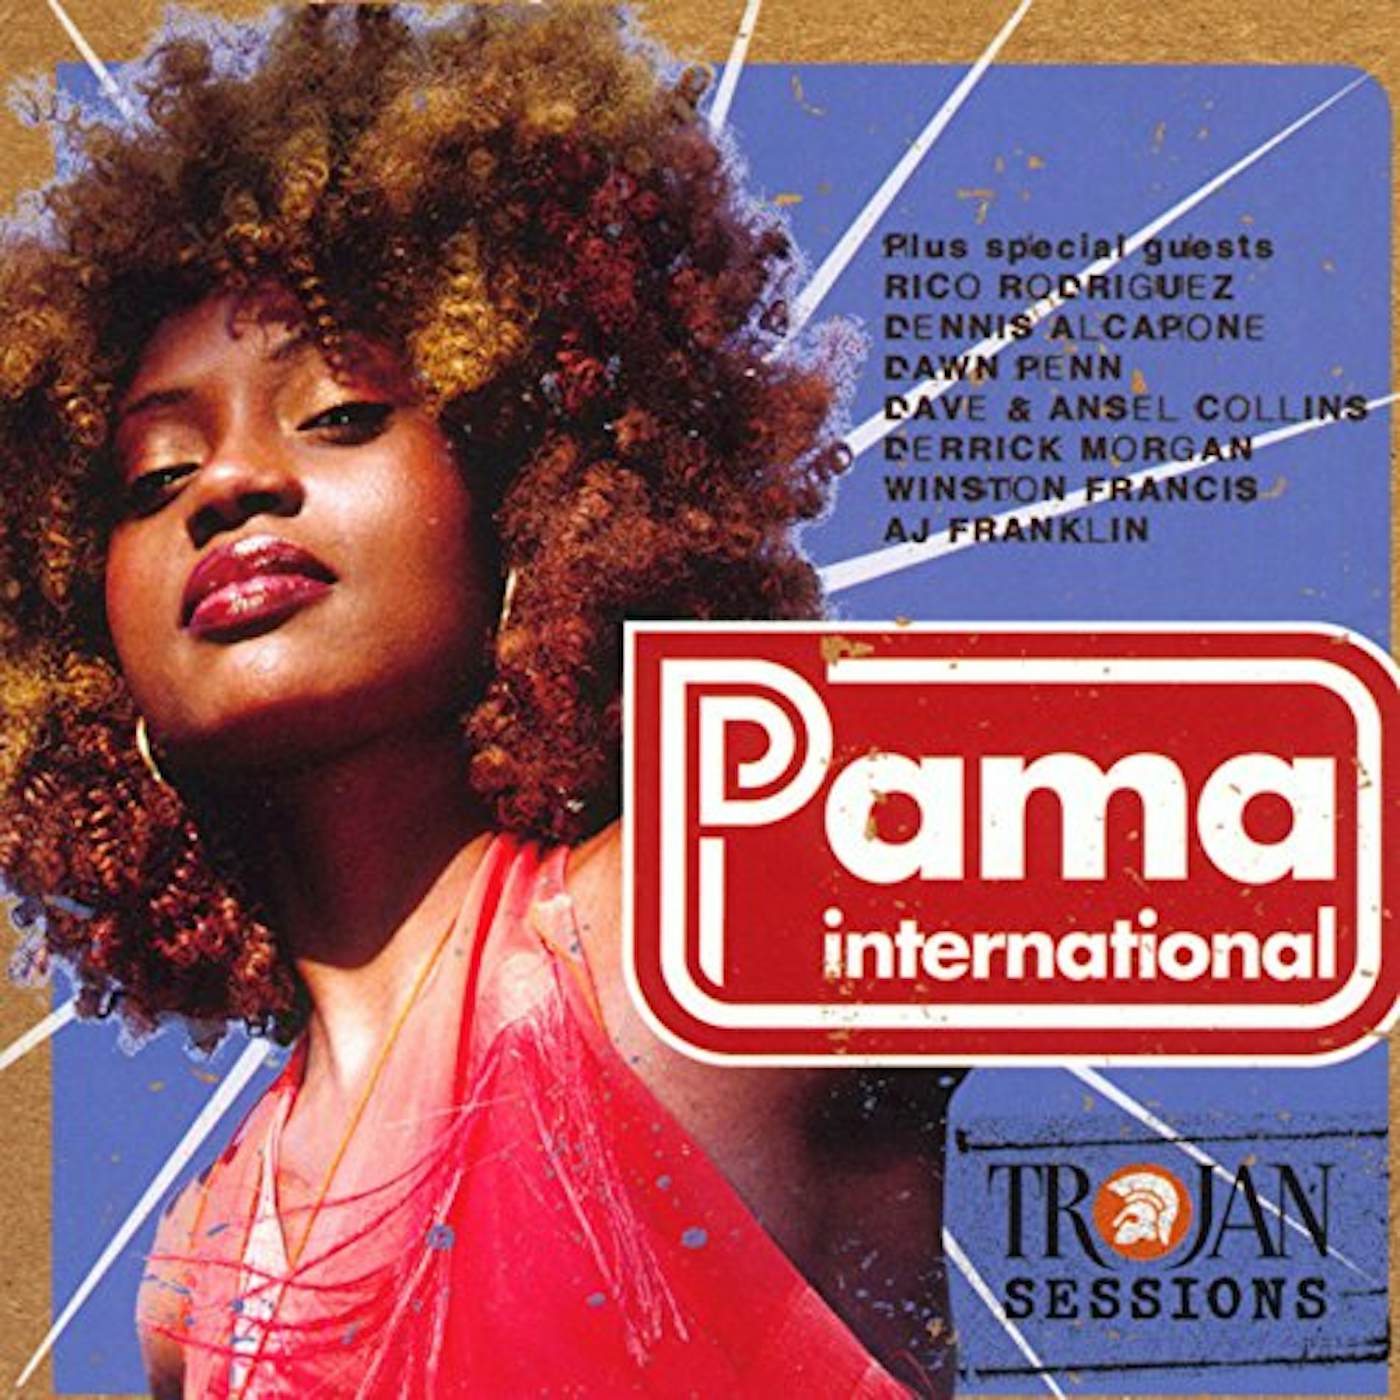 Pama International Trojan Sessions Vinyl Record